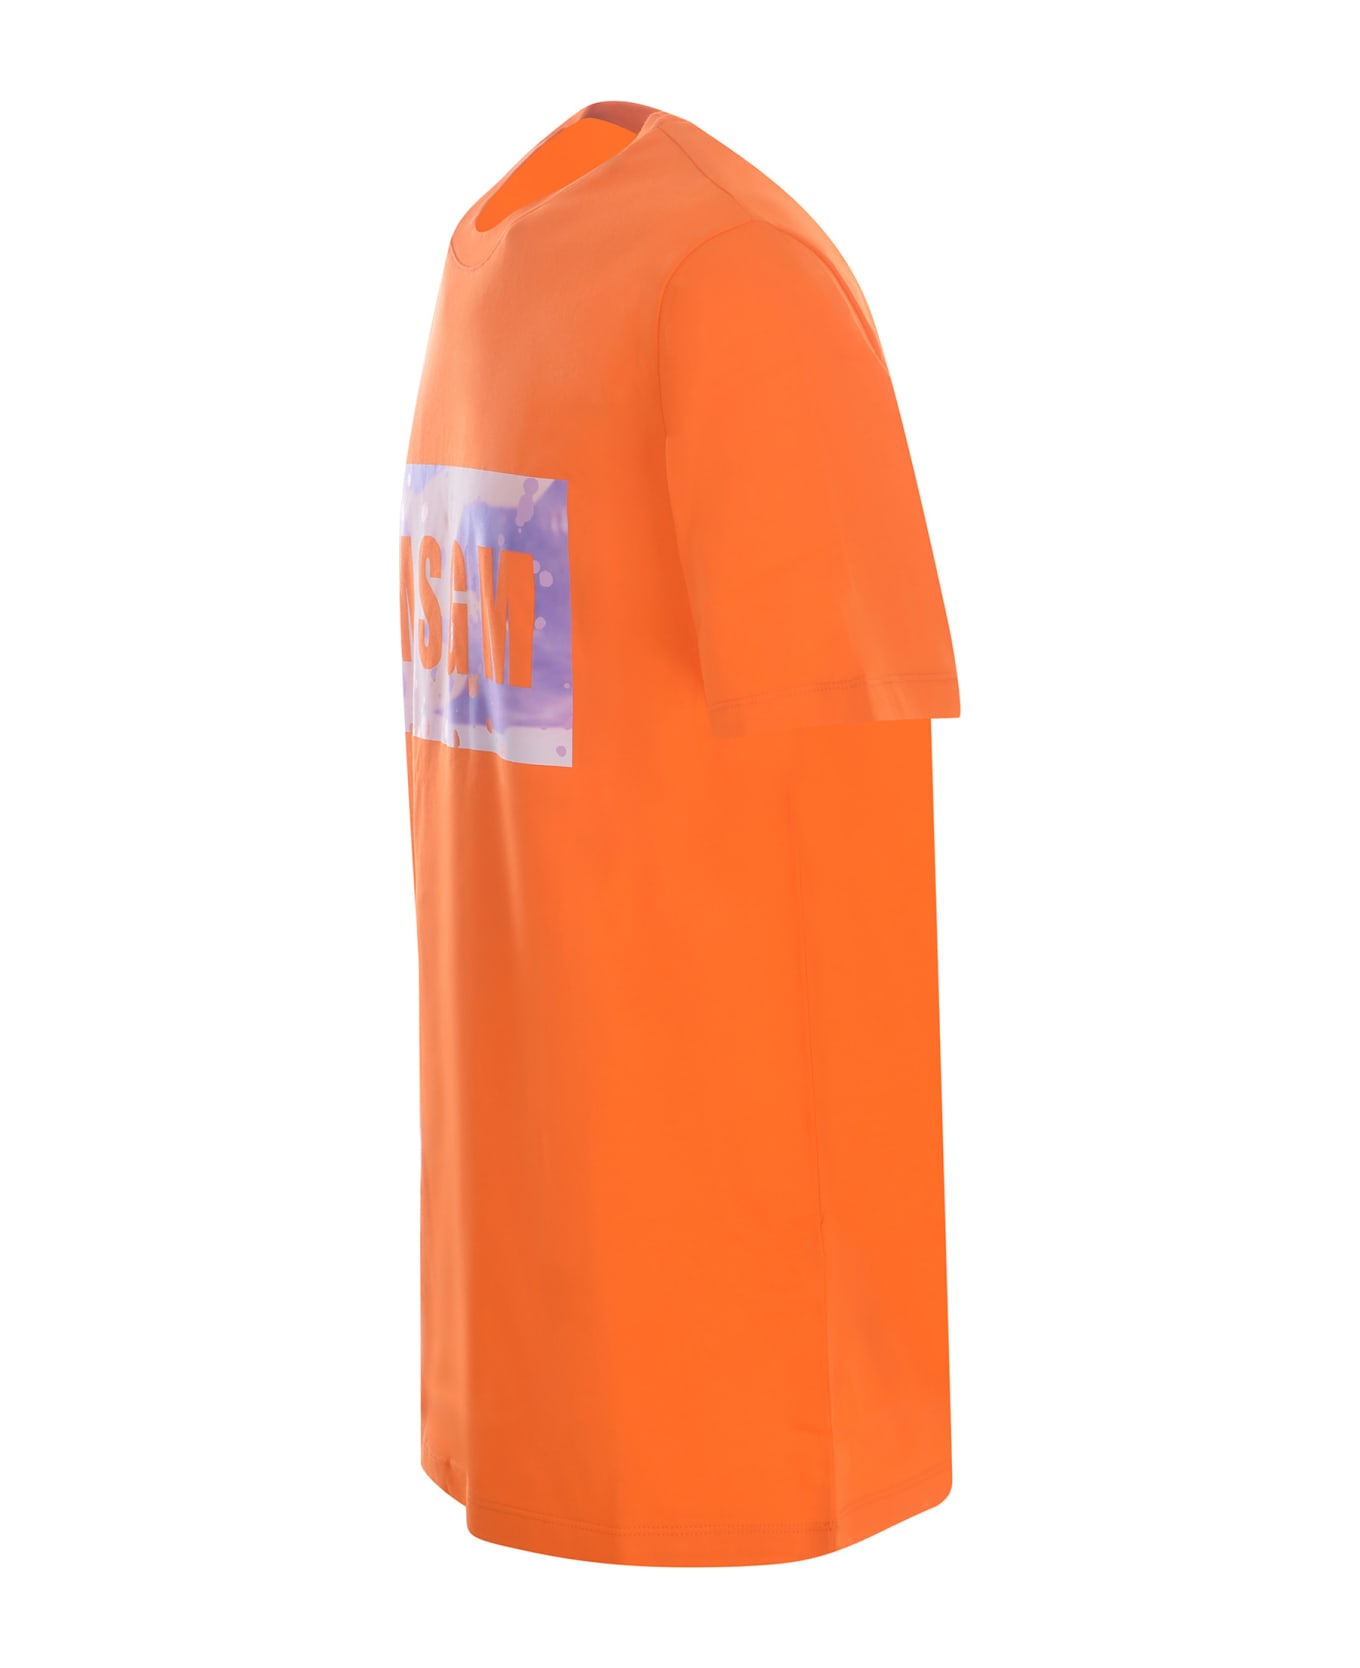 MSGM T-shirt Msgm "camo" Made Of Cotton - Arancione シャツ